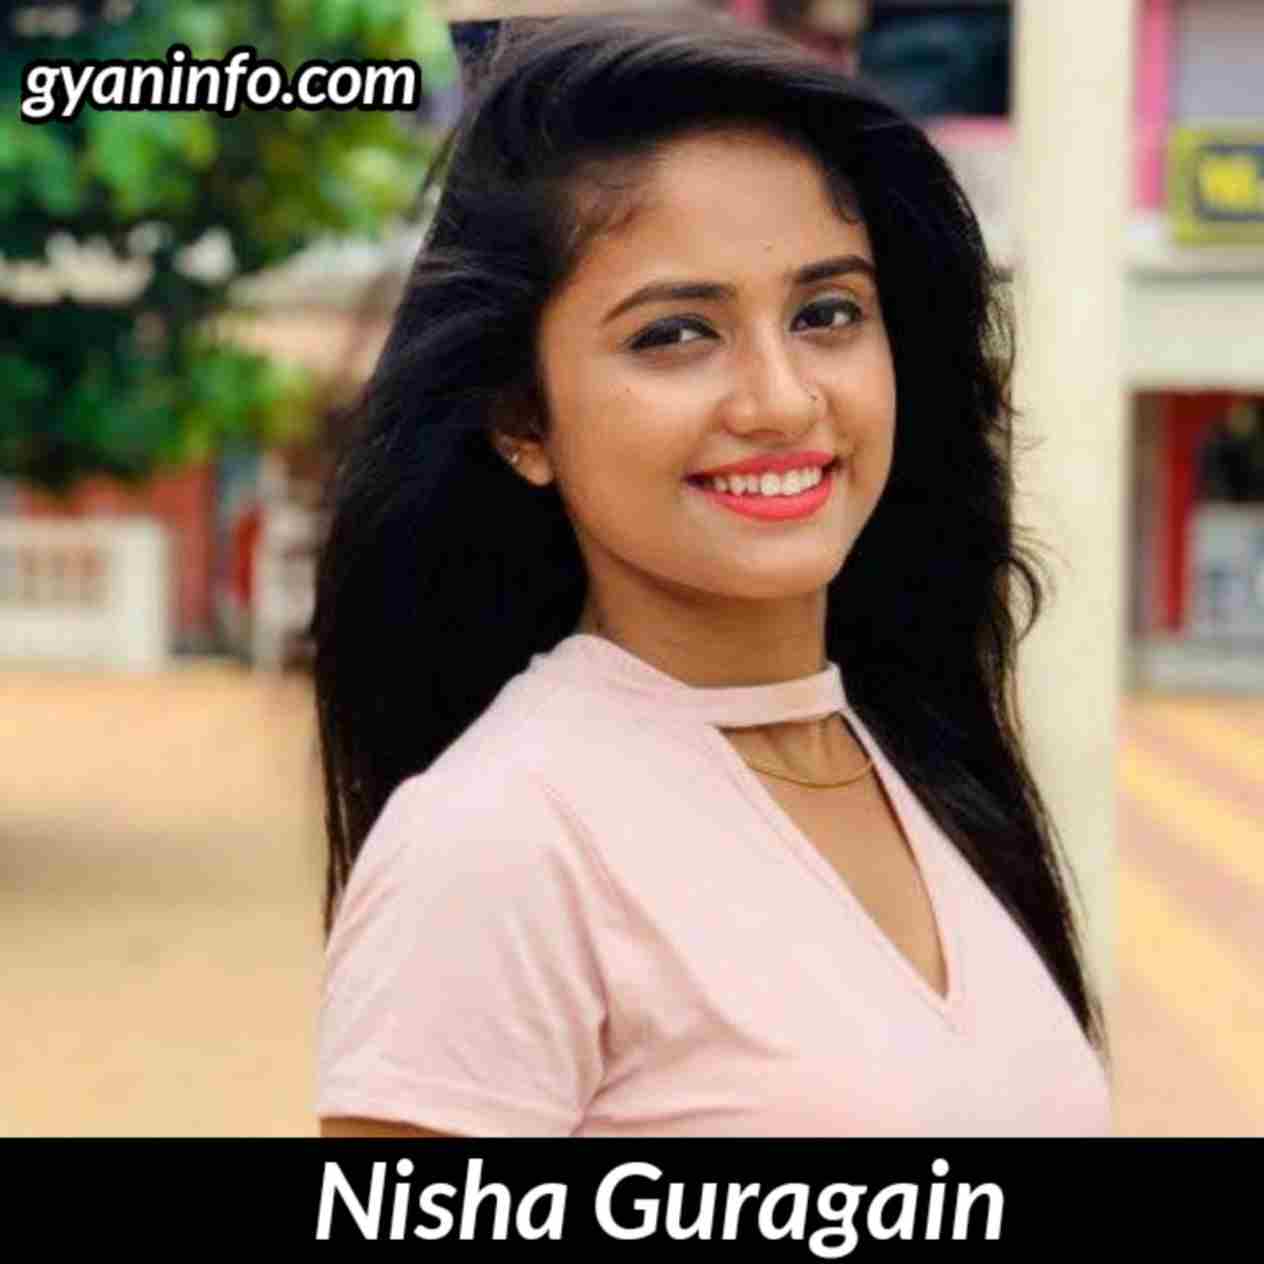 Nisha Guragain [Social Media Influencer] Biography, Age, Height, Weight, Boyfriend, Photo, Net Worth & More